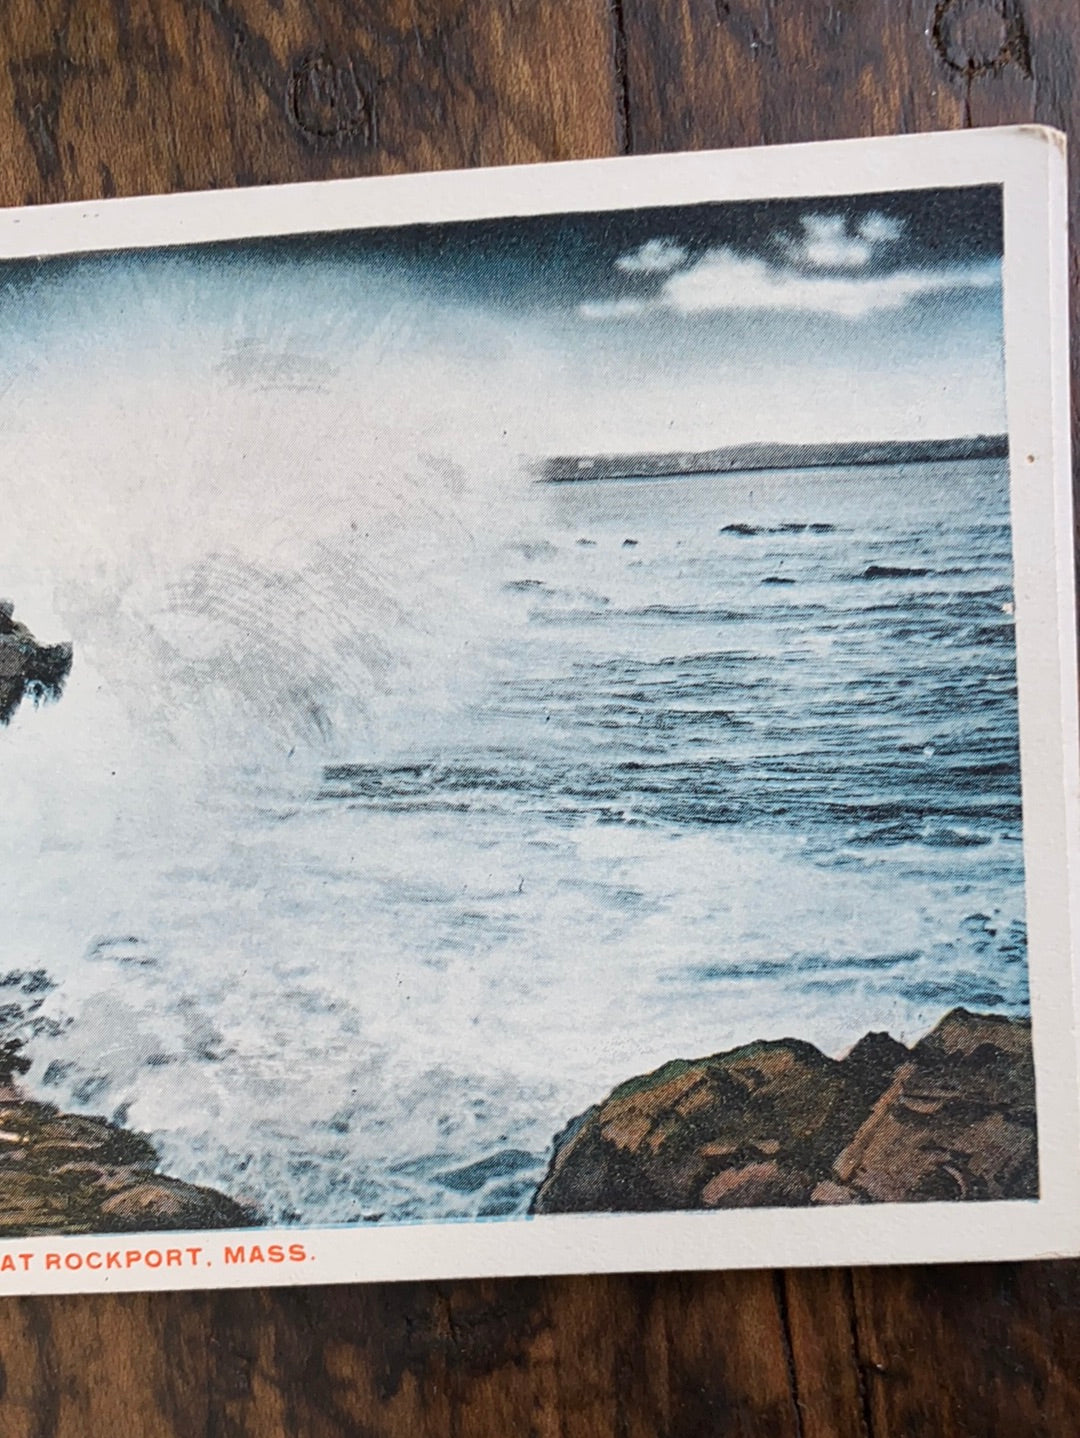 Vintage Surf Along Rocky Shore Post Card